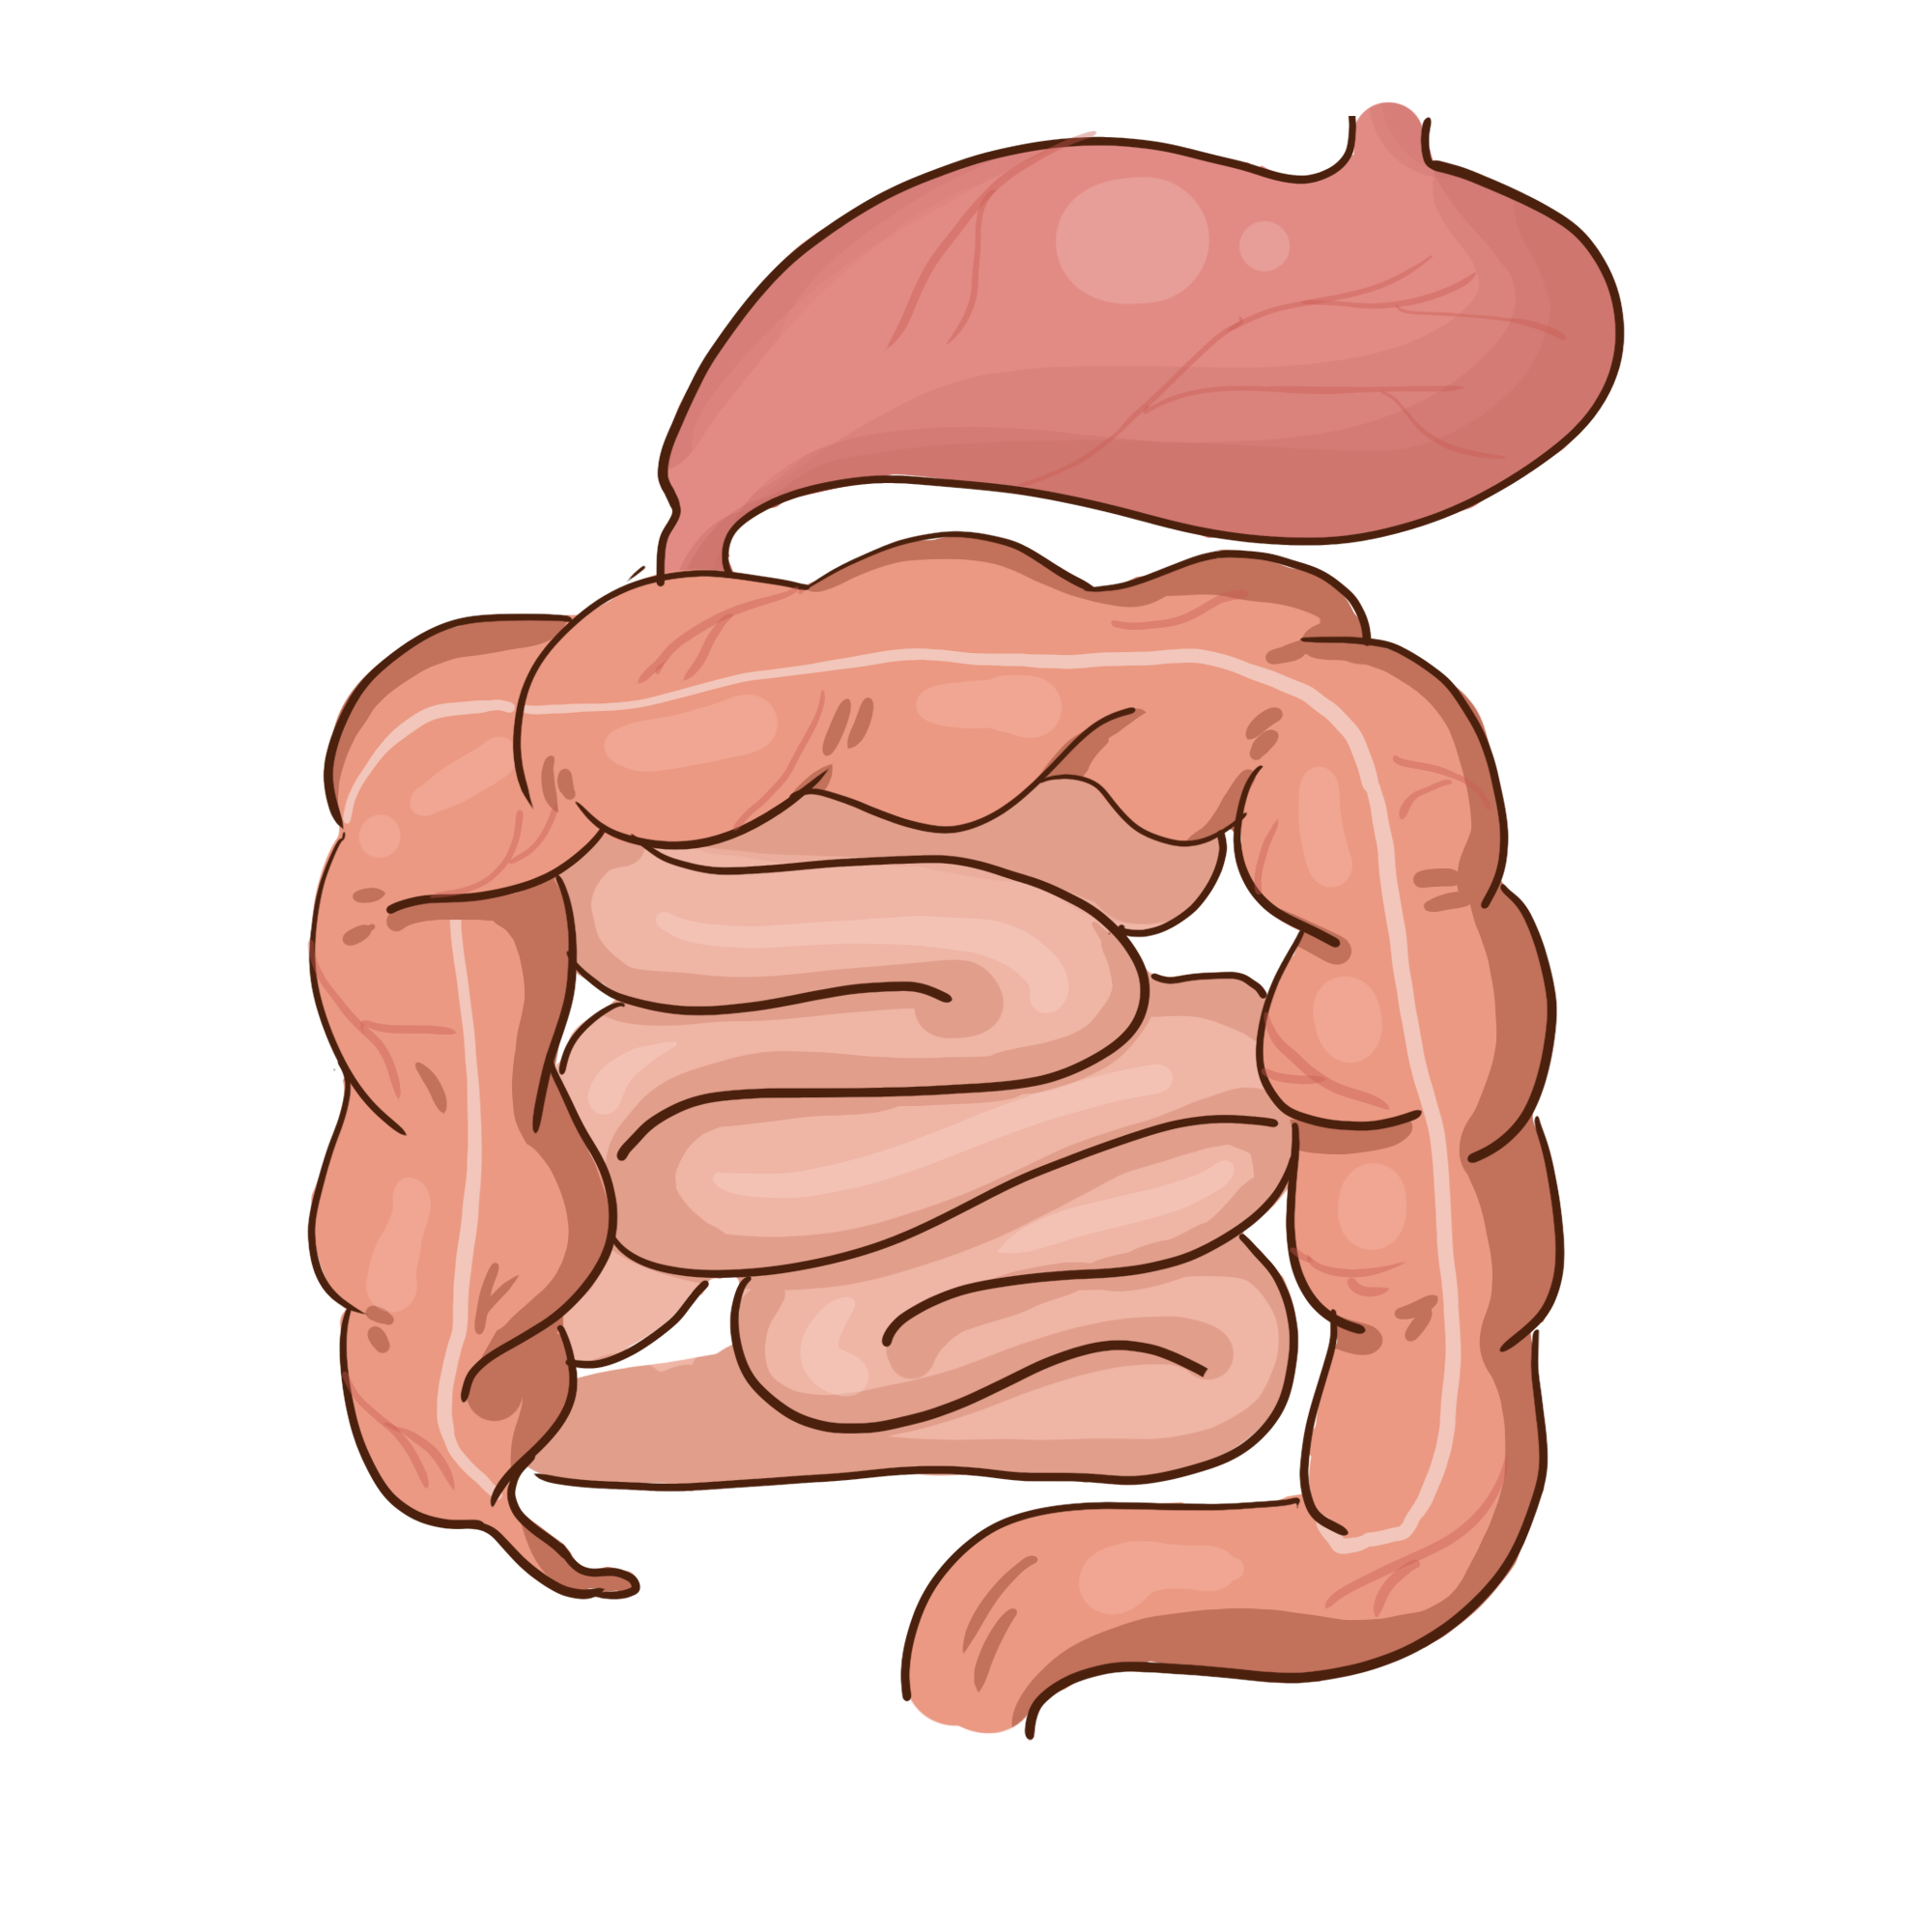 —Pngtree—human organ intestine illustration_5456036.png